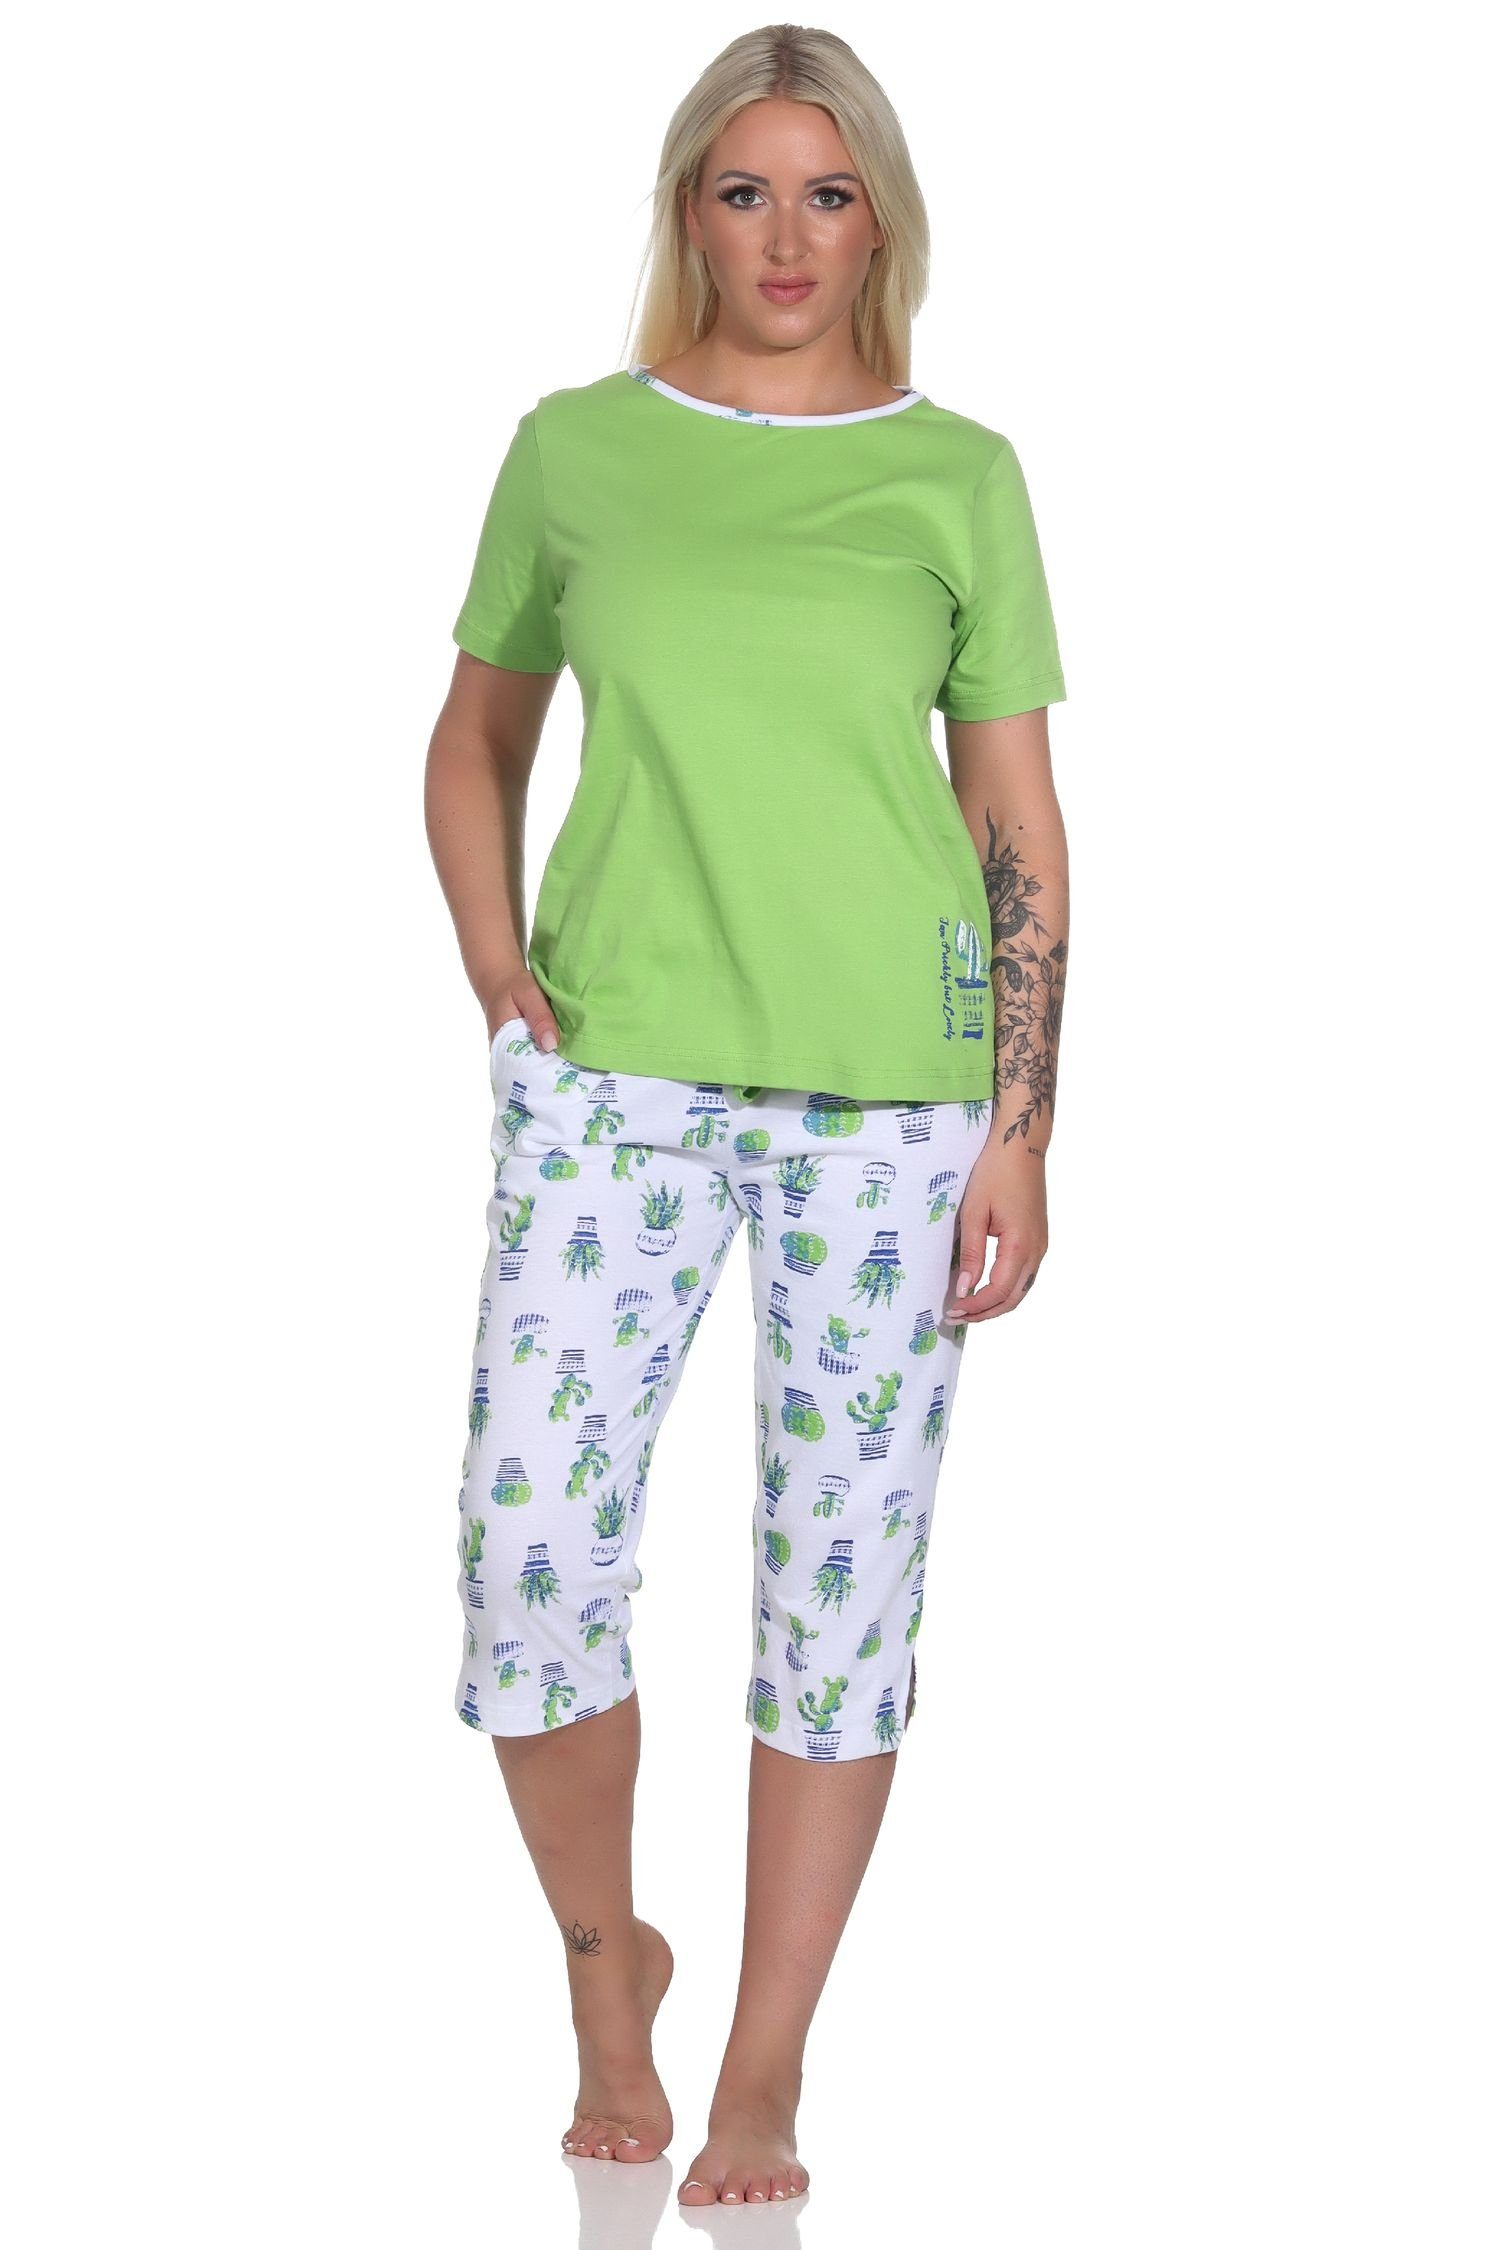 Normann Pyjama Damen Capri Kurzarm Schlafanzug mit Kaktus als Motiv grün